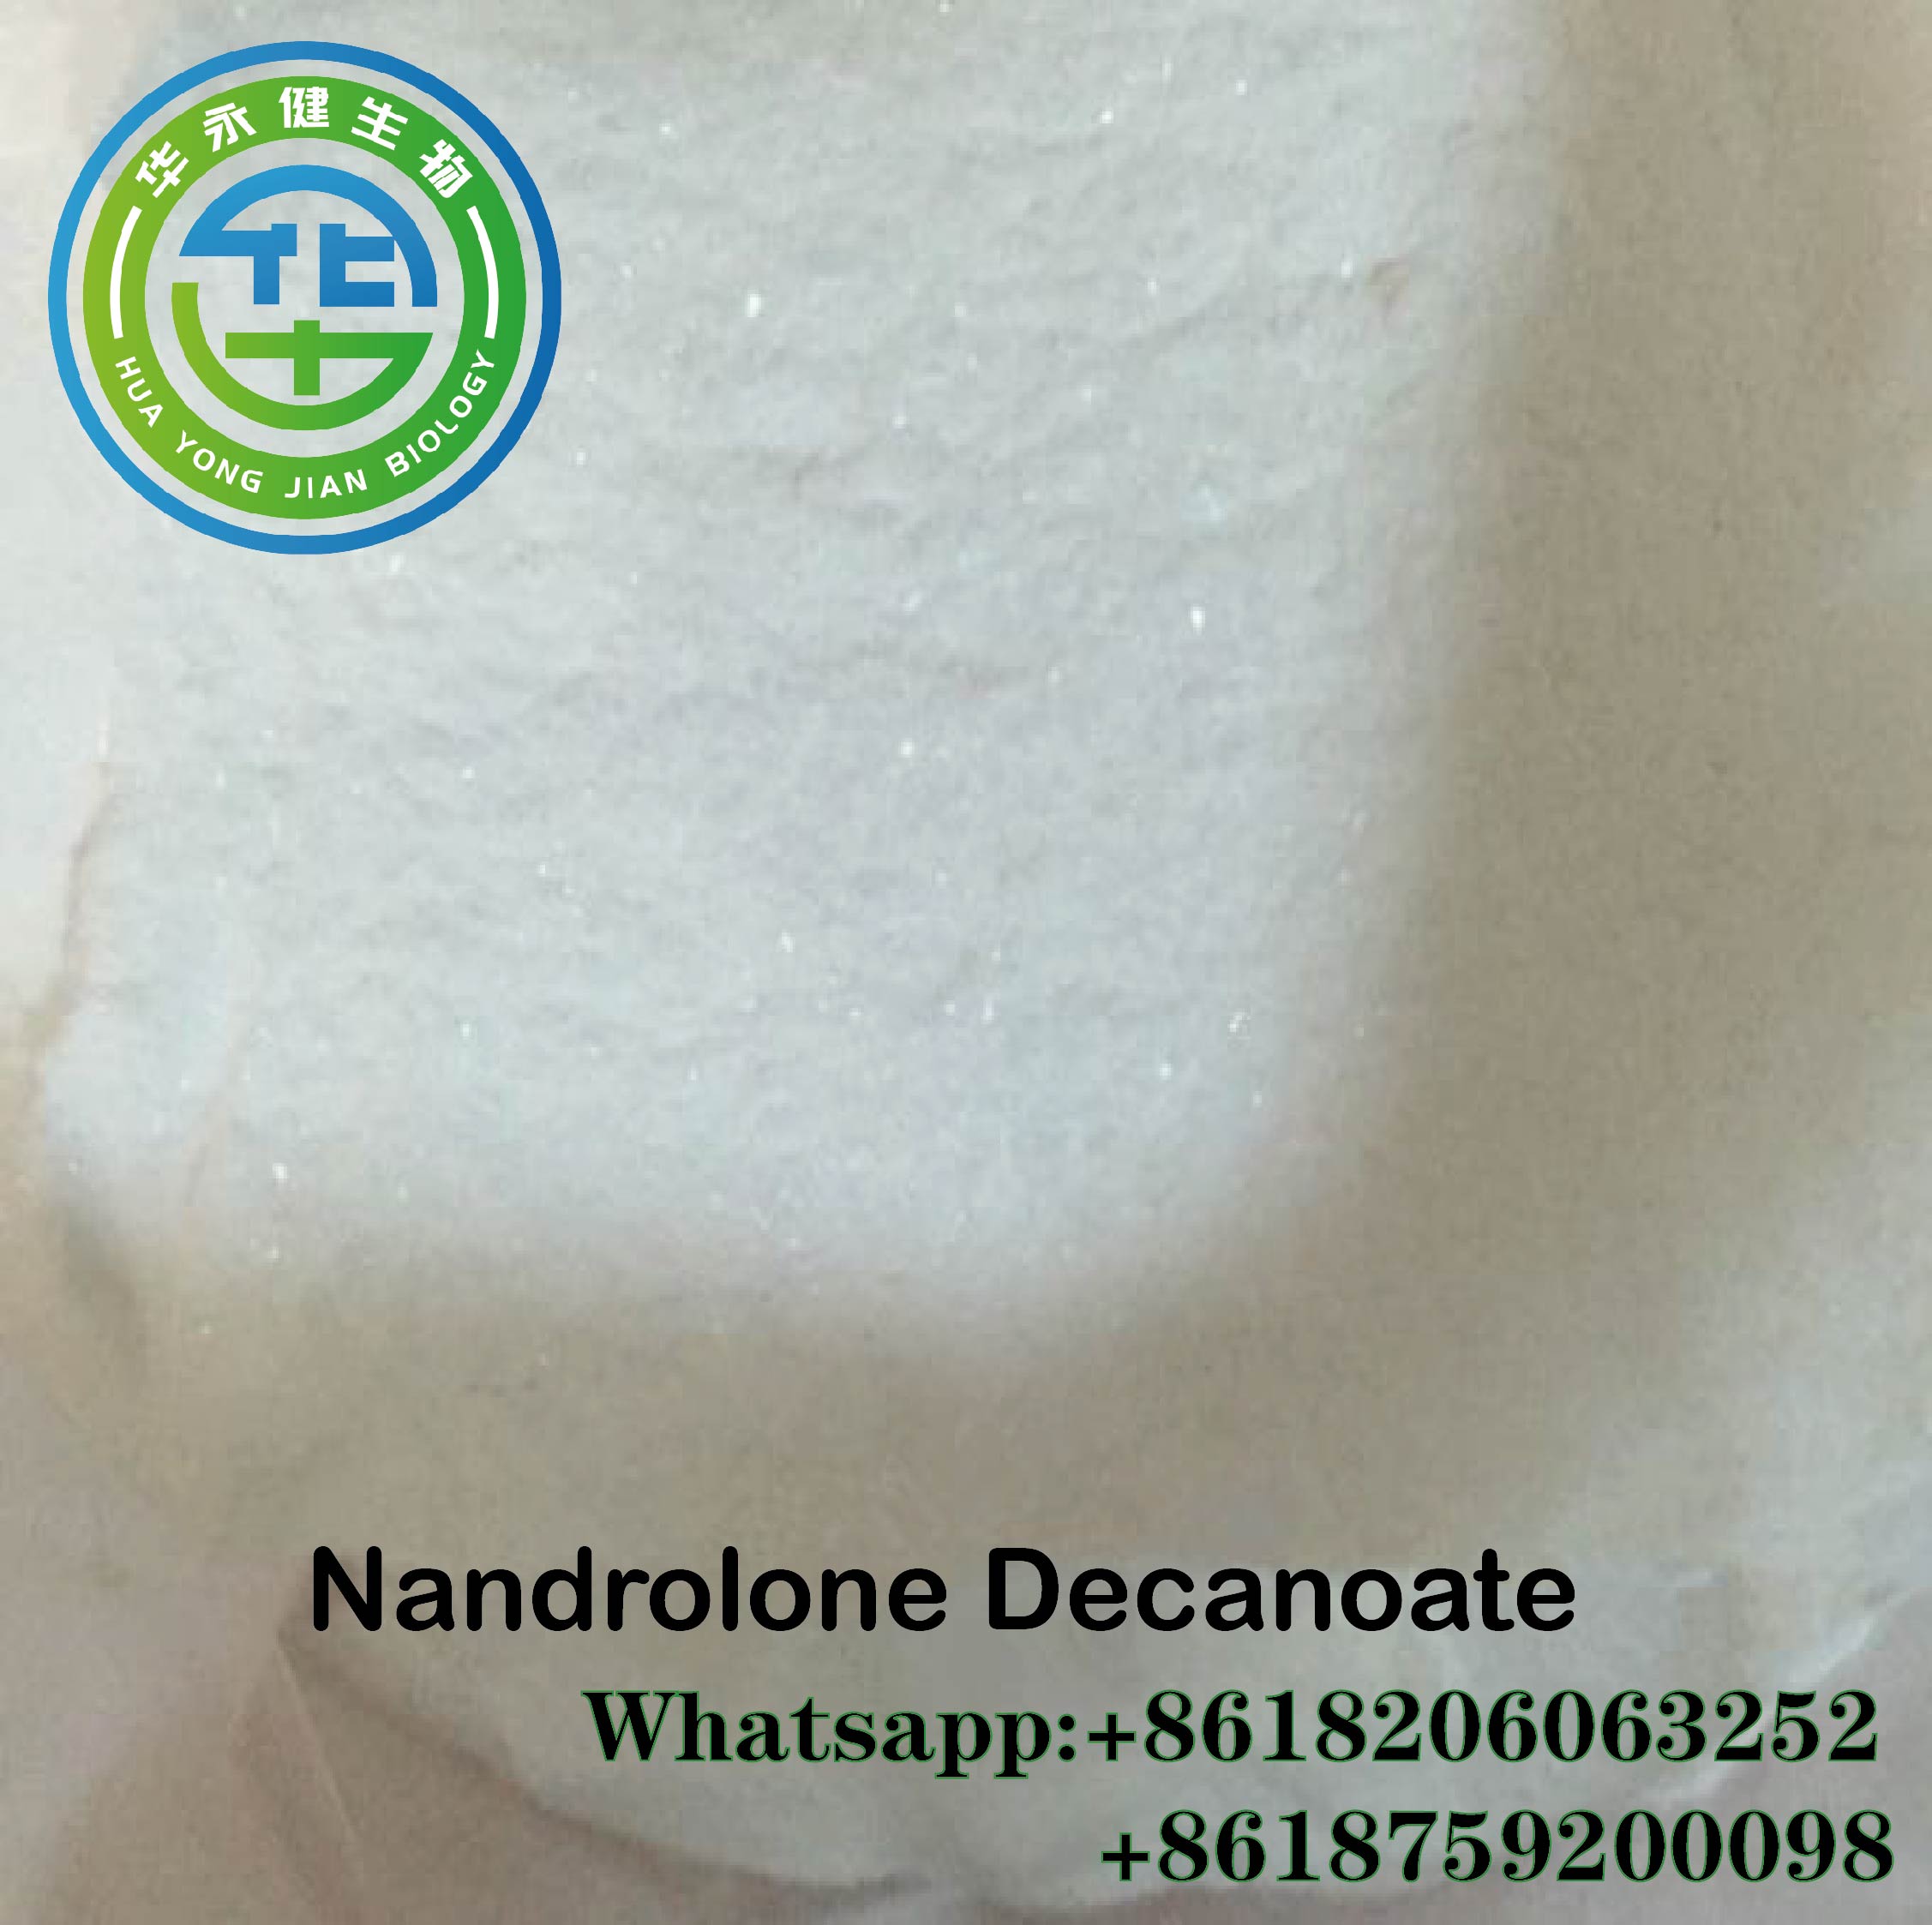  Deca Durabolin Steroid Powder Bodybuilding Supplements Nandrolone Decanoate CAS 360-70-3